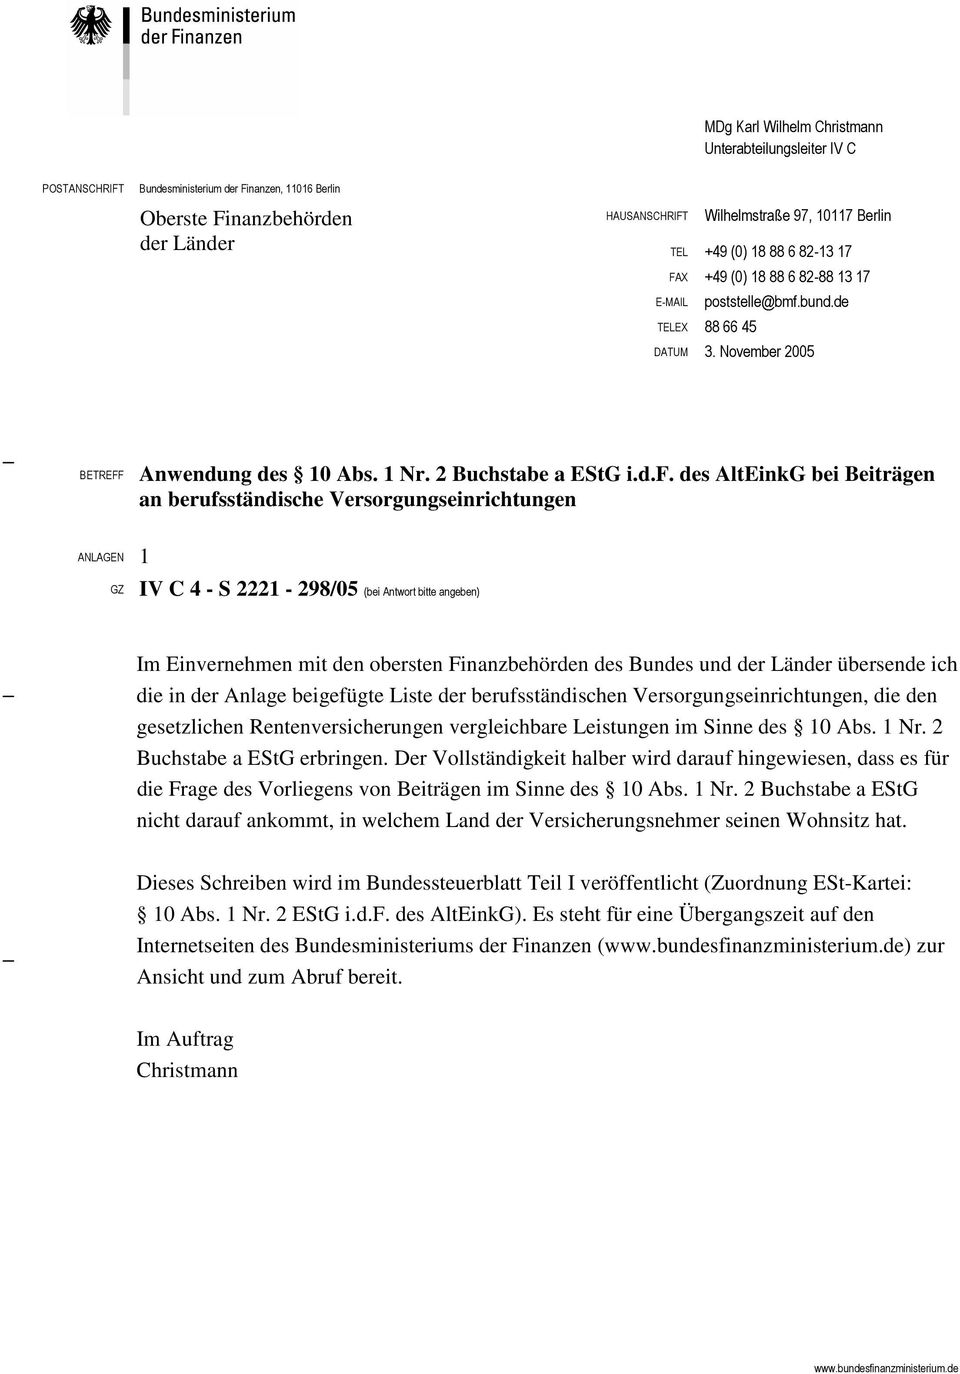 November 2005 BETREFF Anwendung des 10 Abs. 1 Nr. 2 Buchstabe a EStG i.d.f.